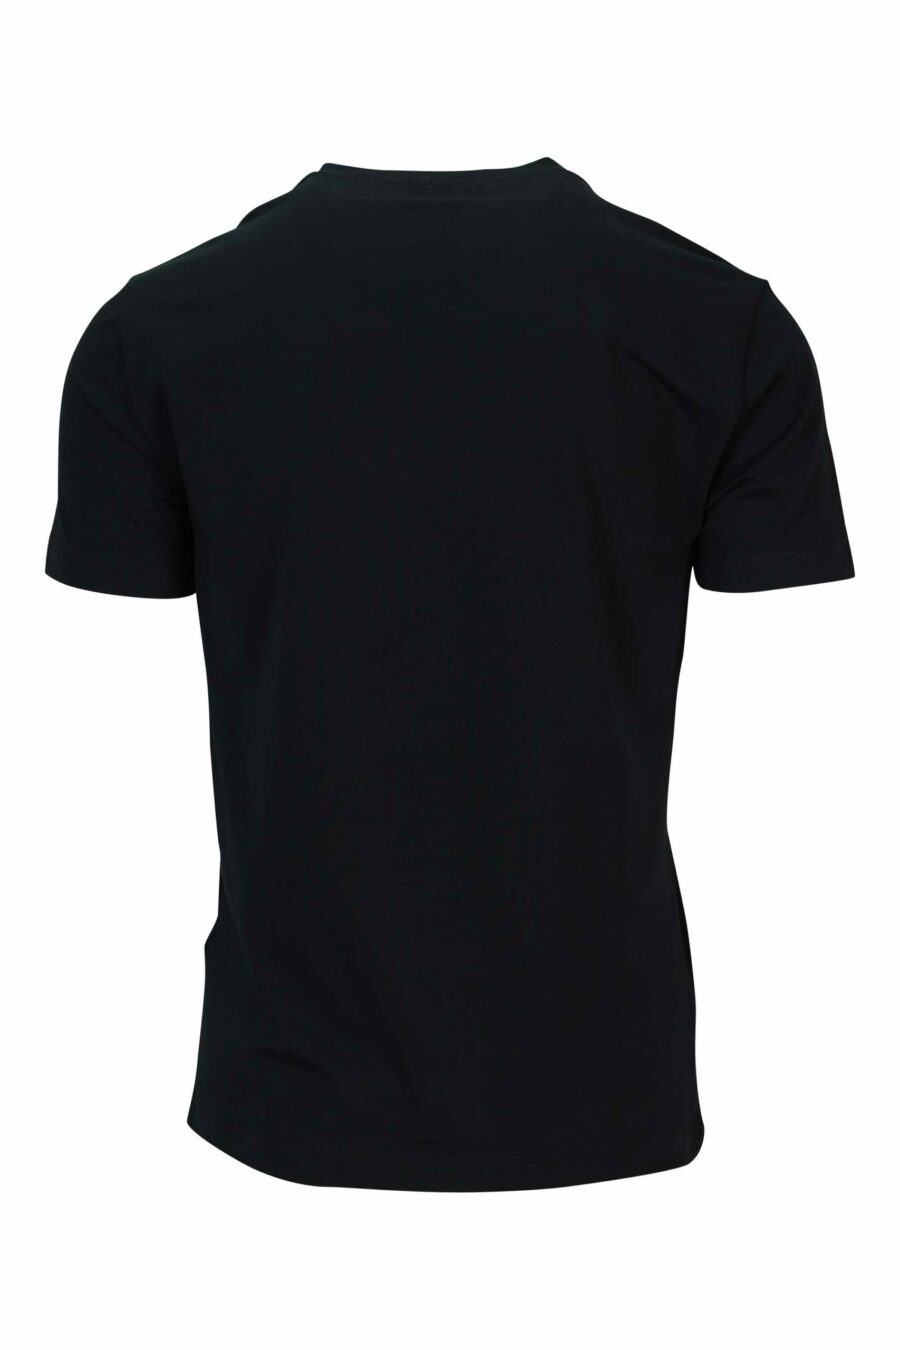 T-shirt black with blue "lux identity" maxilogo - 8058947491346 1 1 scaled